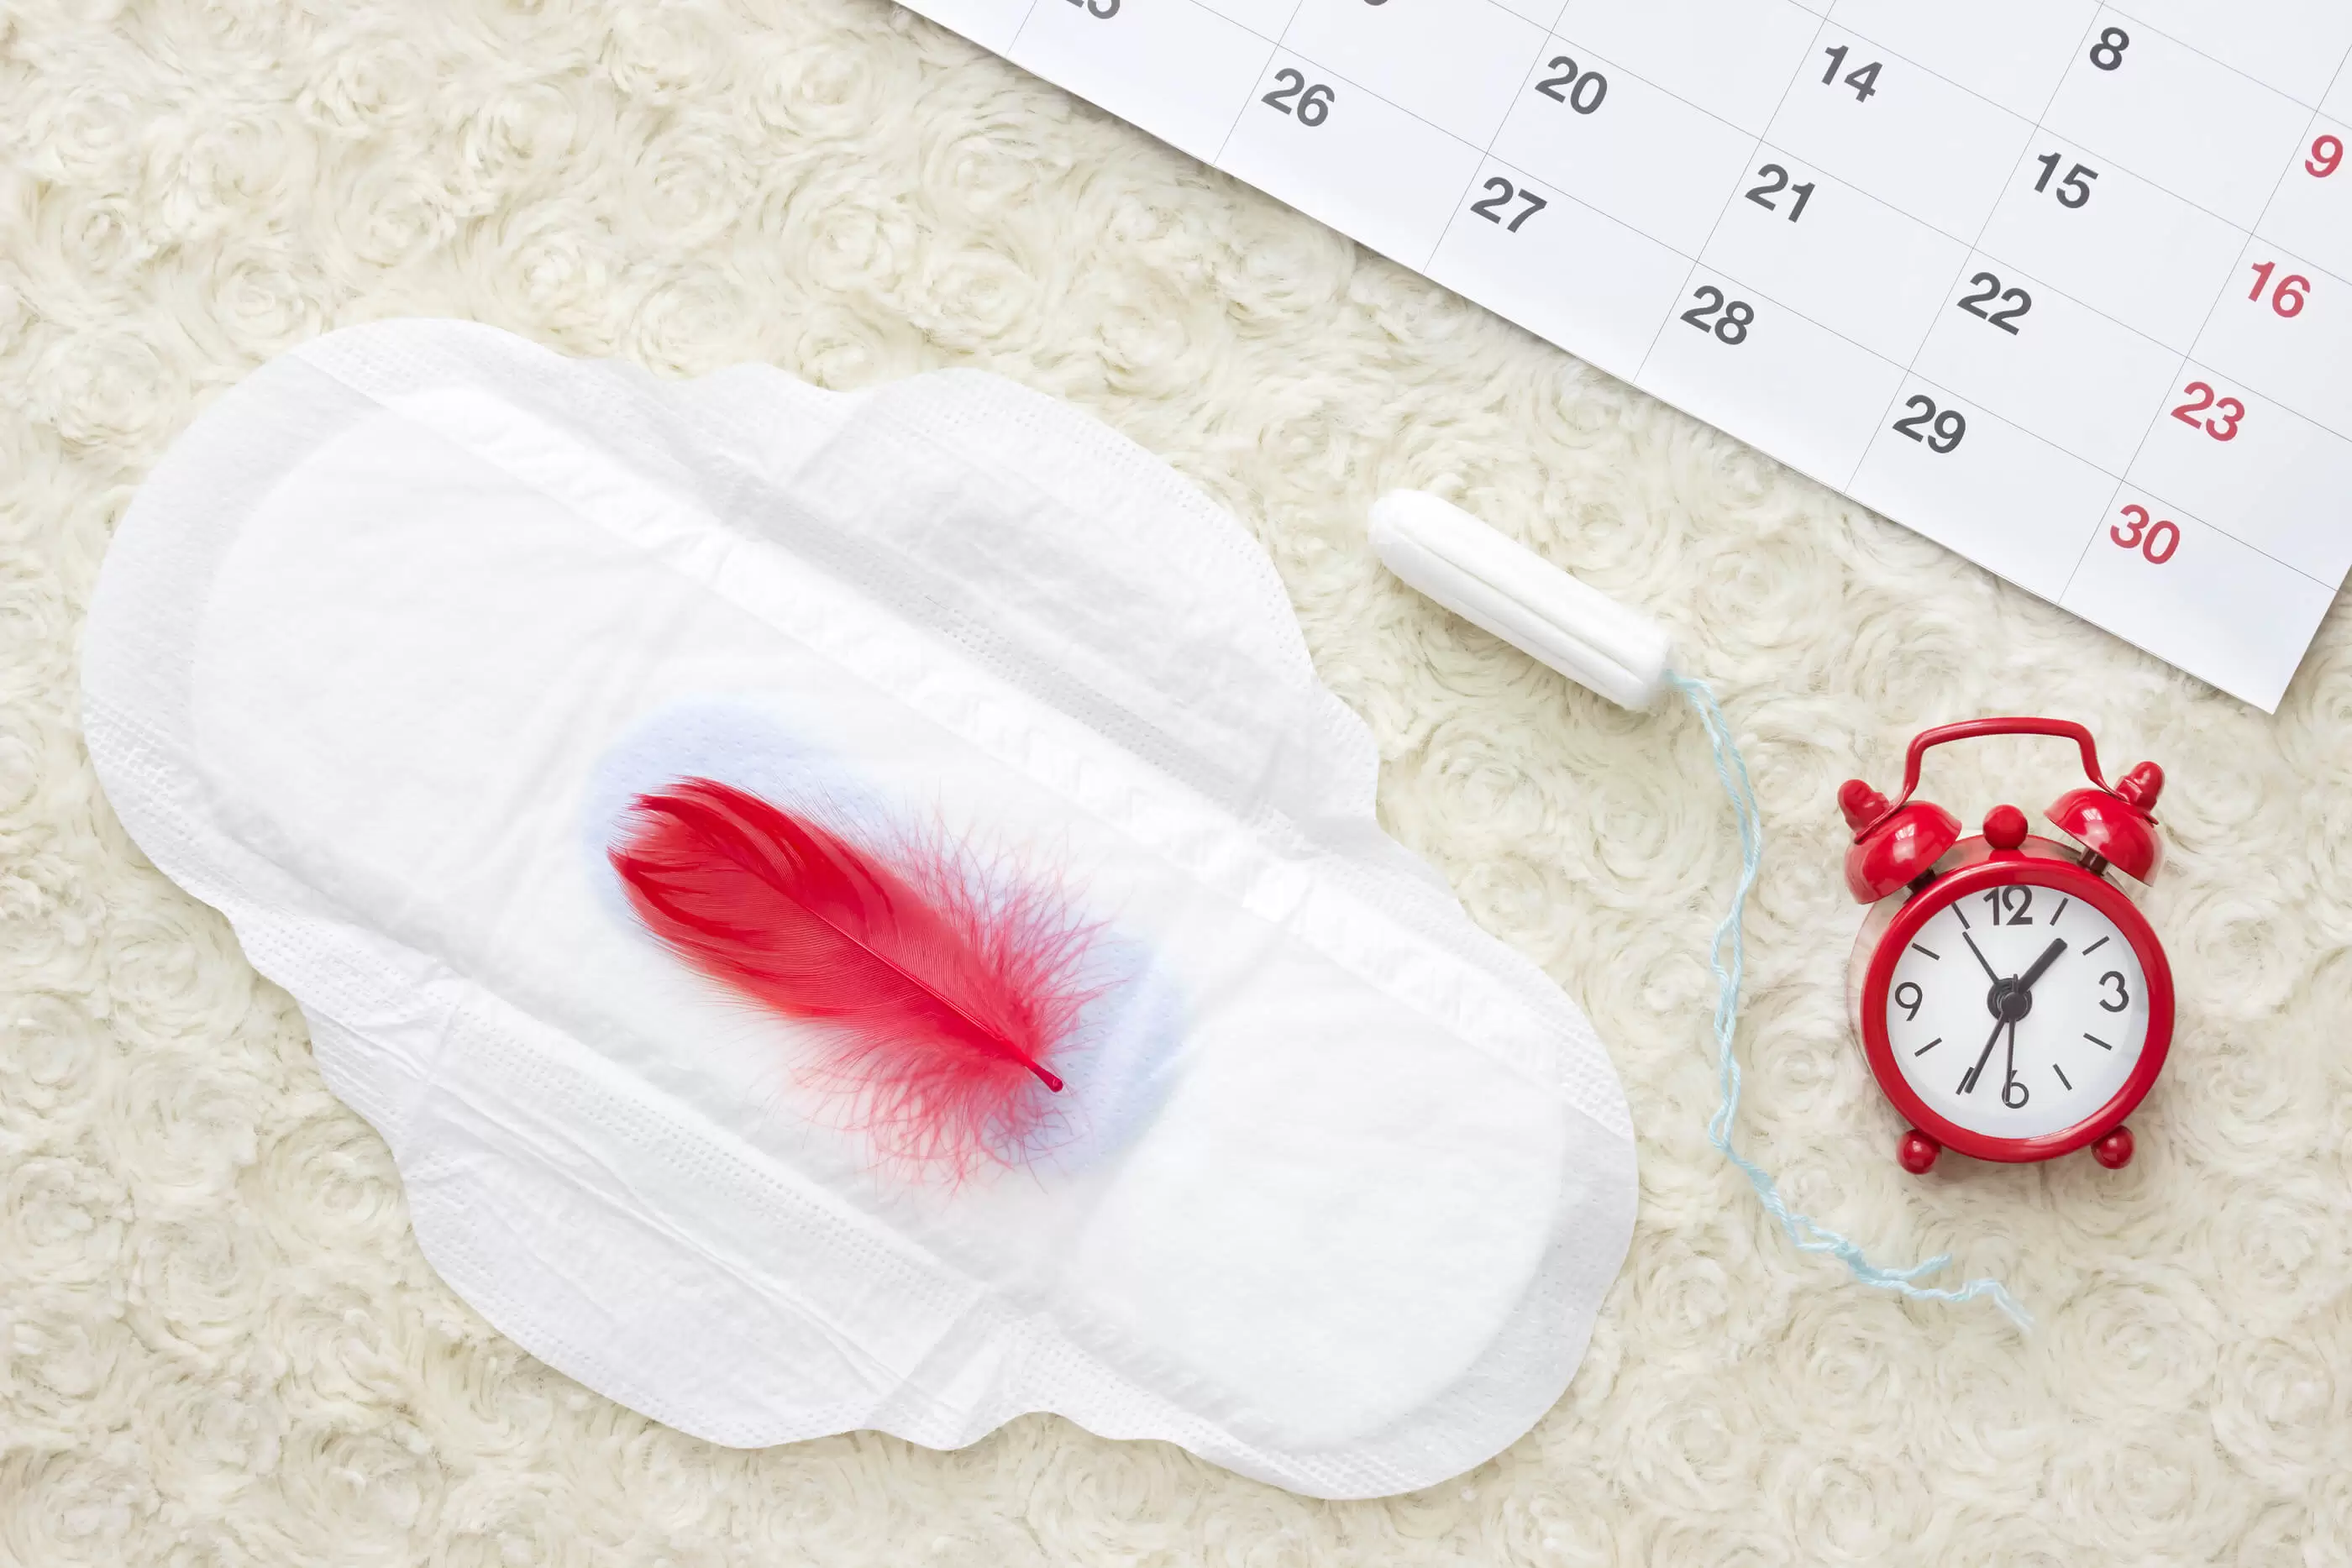 Men Try 'Period Pain Simulator' To Understand Menstruation - Men's